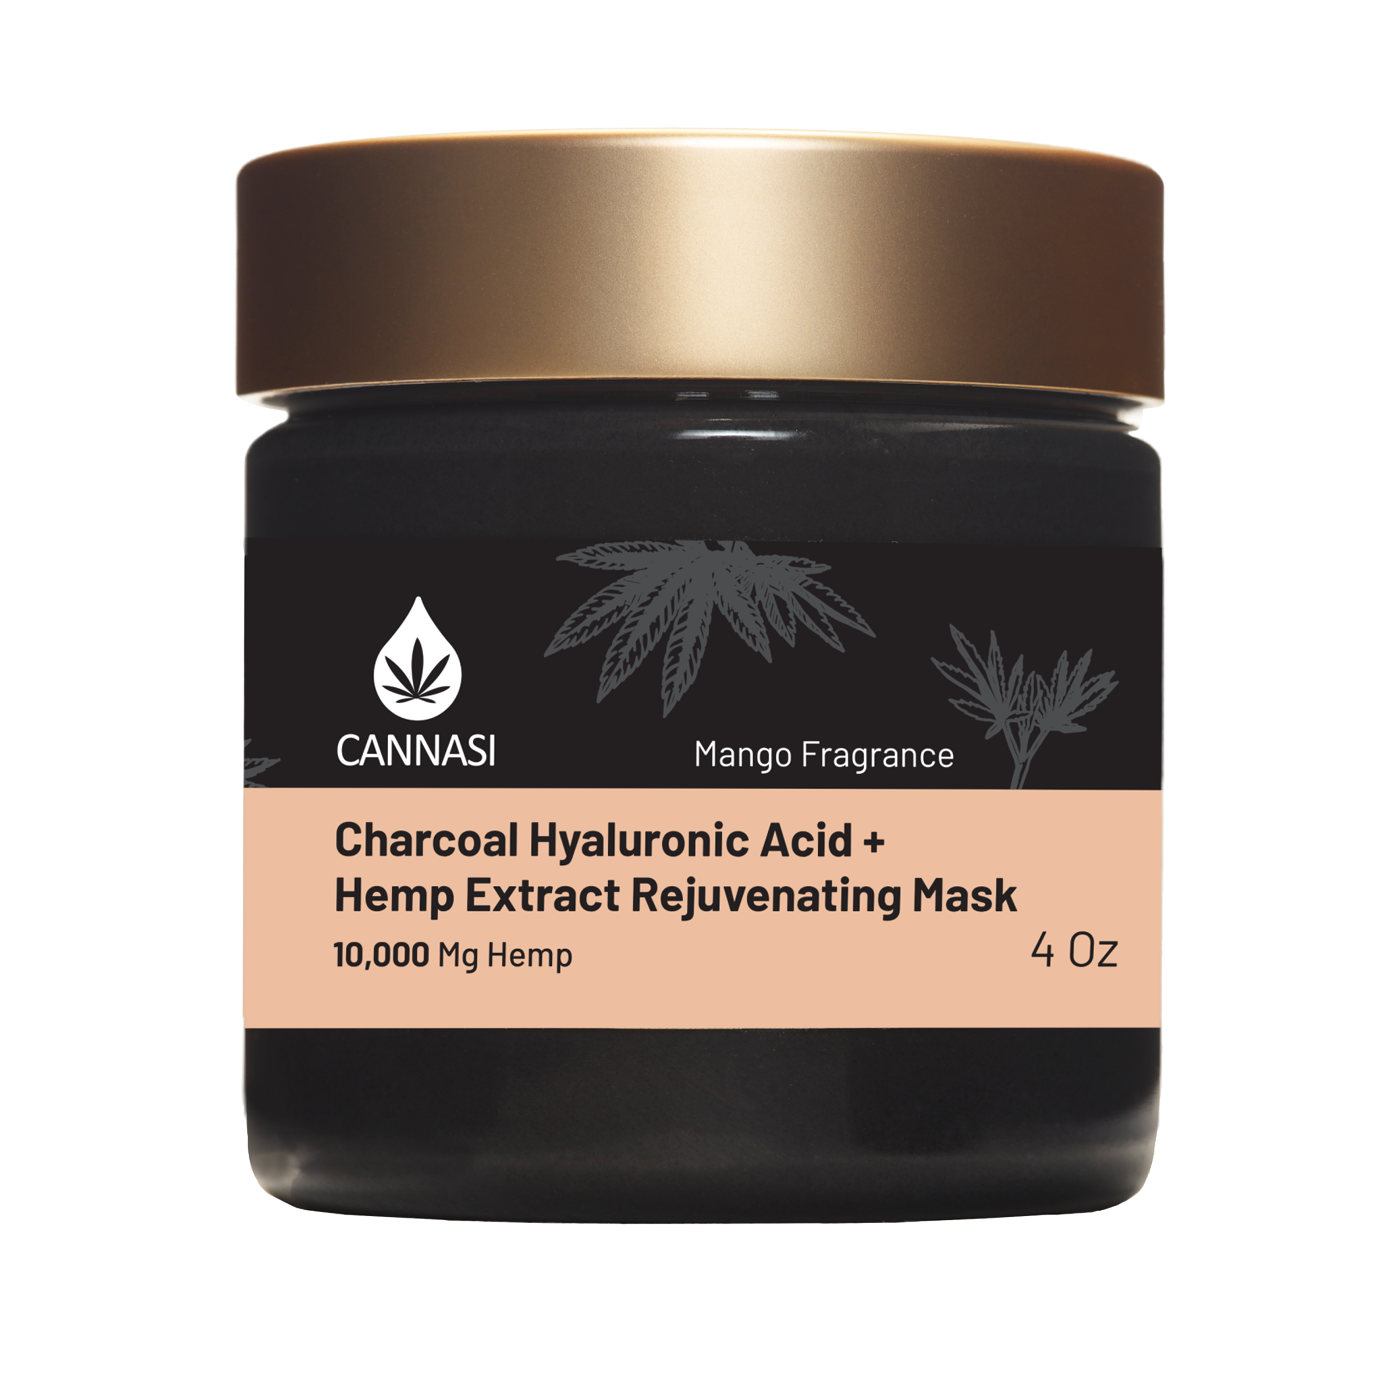 Charcoal Hyaluronic Acid + Hemp Extract Rejuvenating Mask